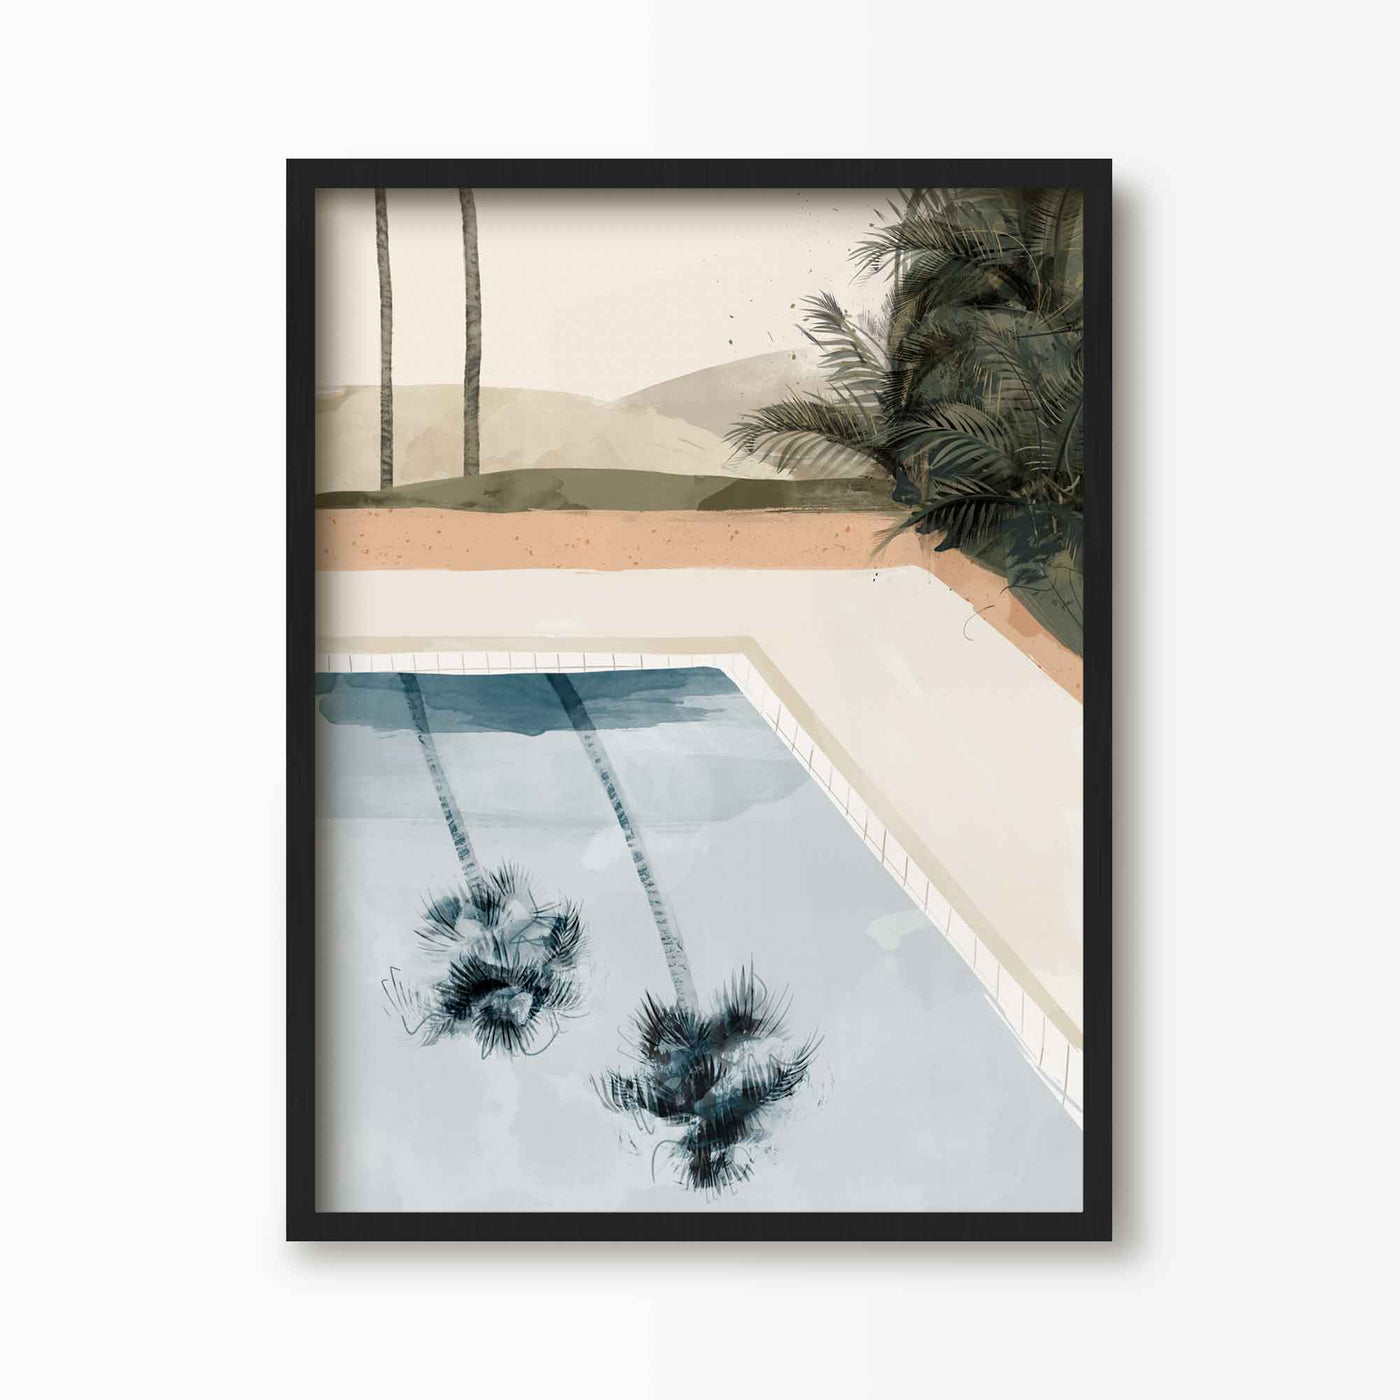 Green Lili 30x40cm (12x16") / Black Frame Palm Springs Poolside Art Print